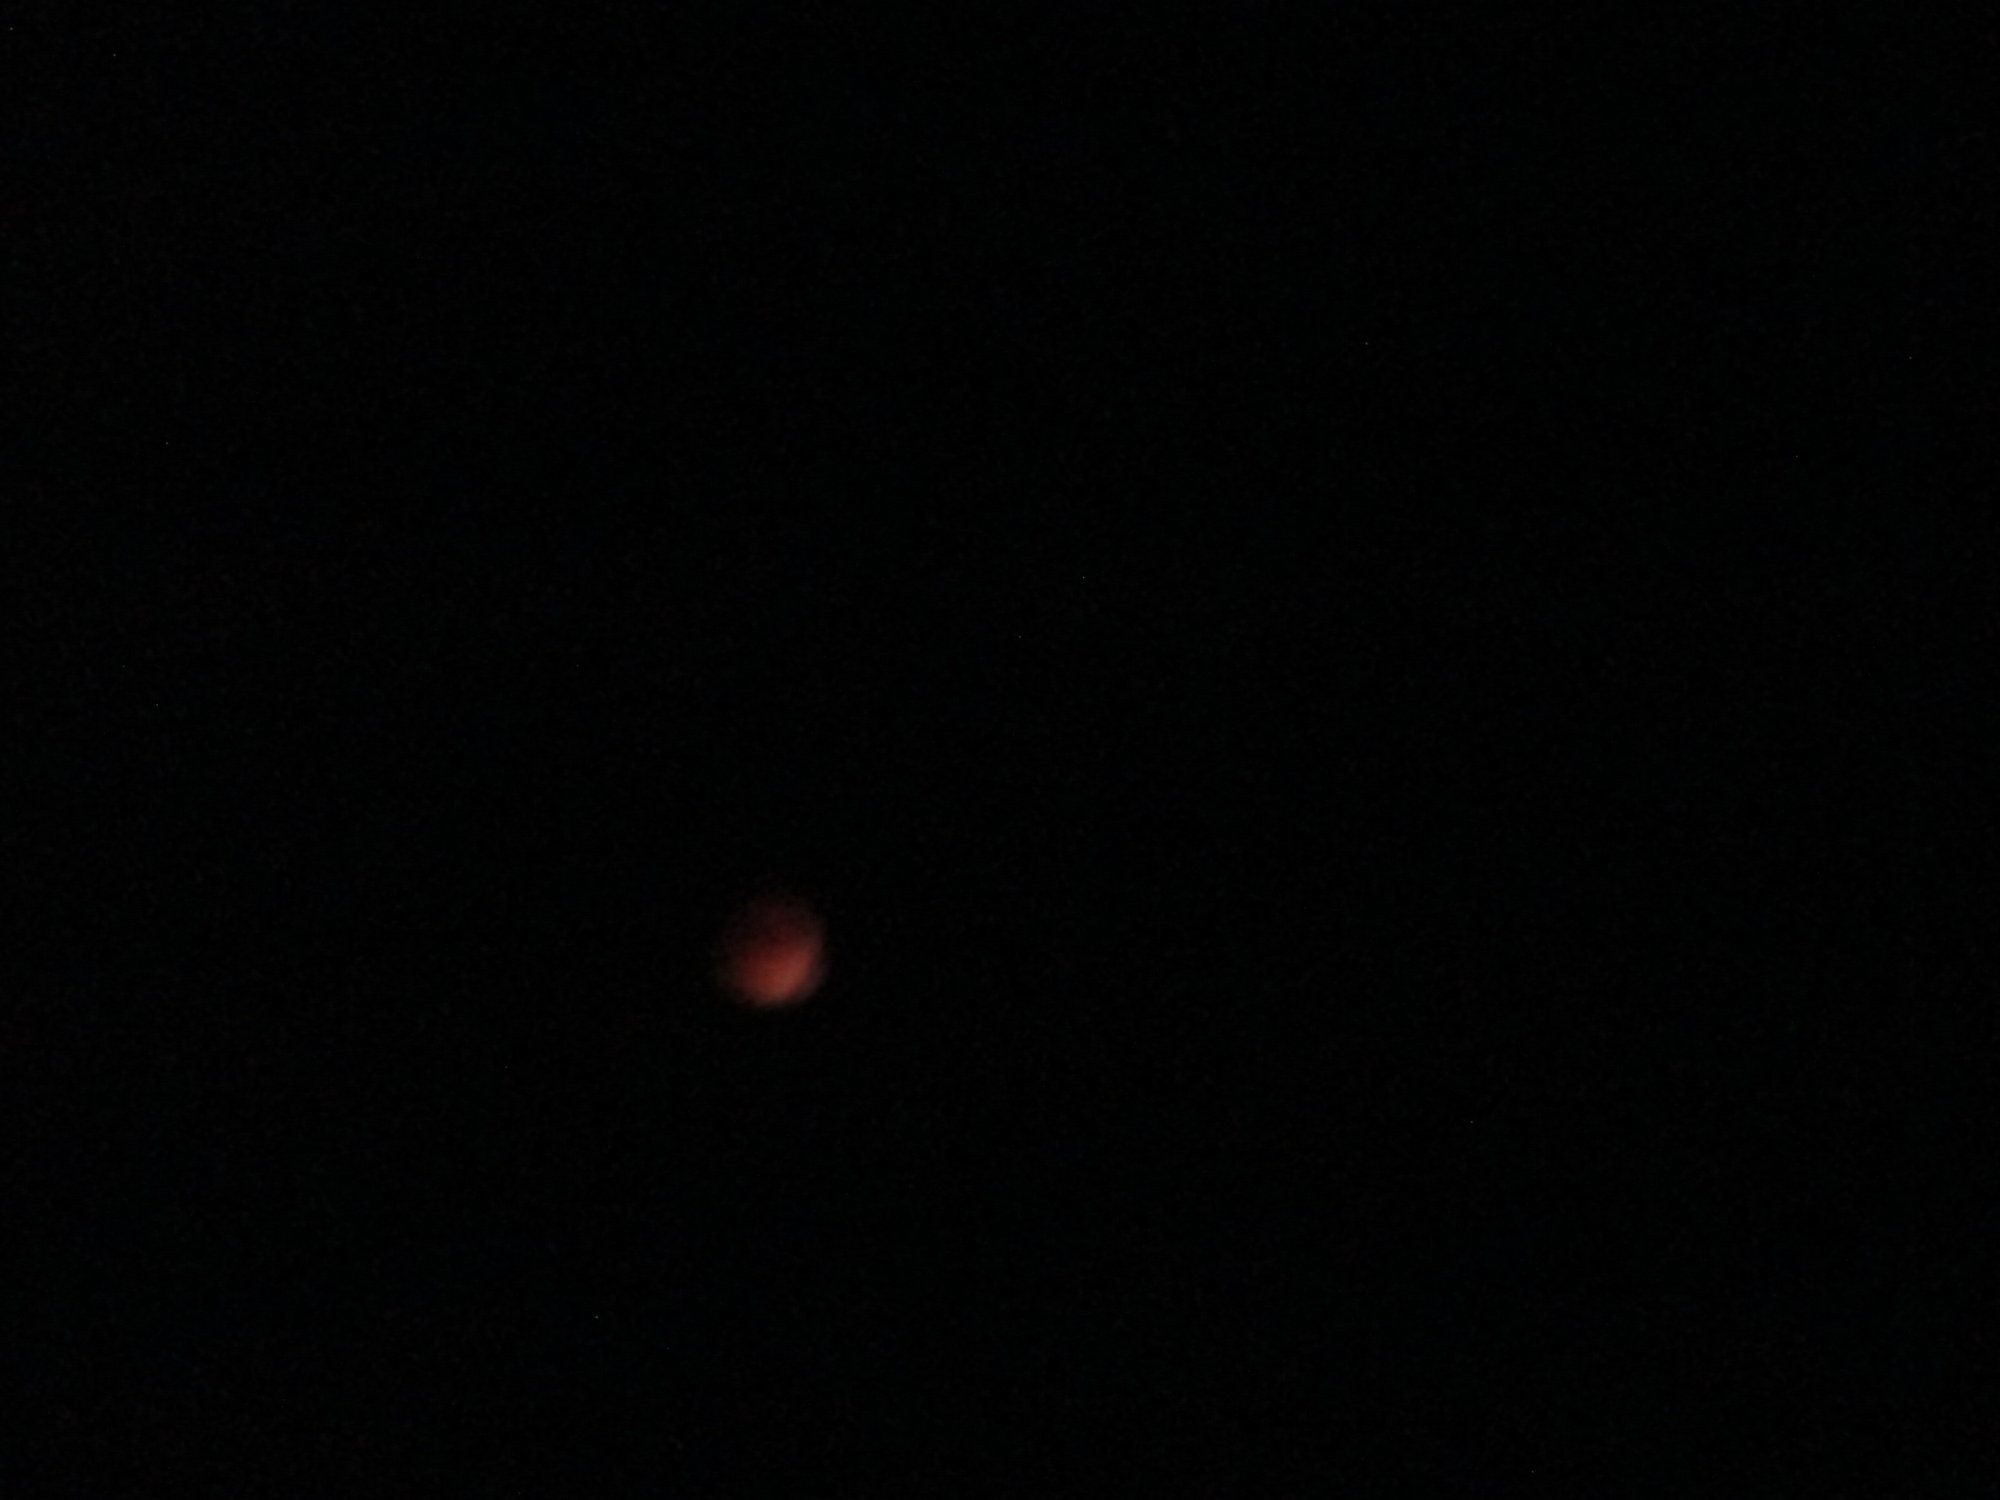 2000x1500 Super blood moon lunar eclipse: Amazing photos